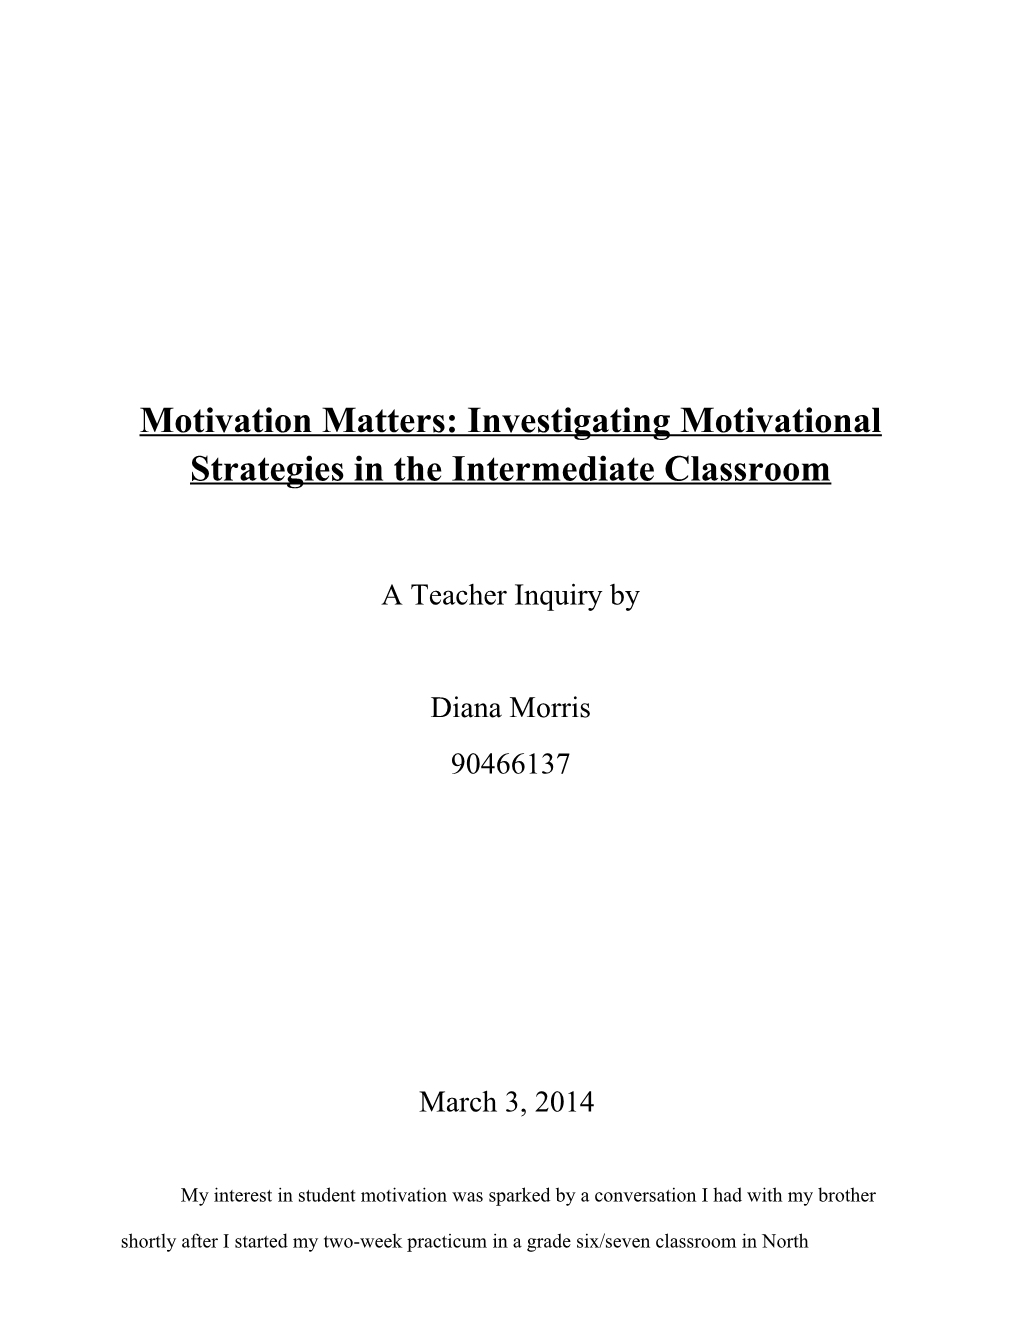 Motivation Matters: Investigating Motivational Strategies in the Intermediate Classroom